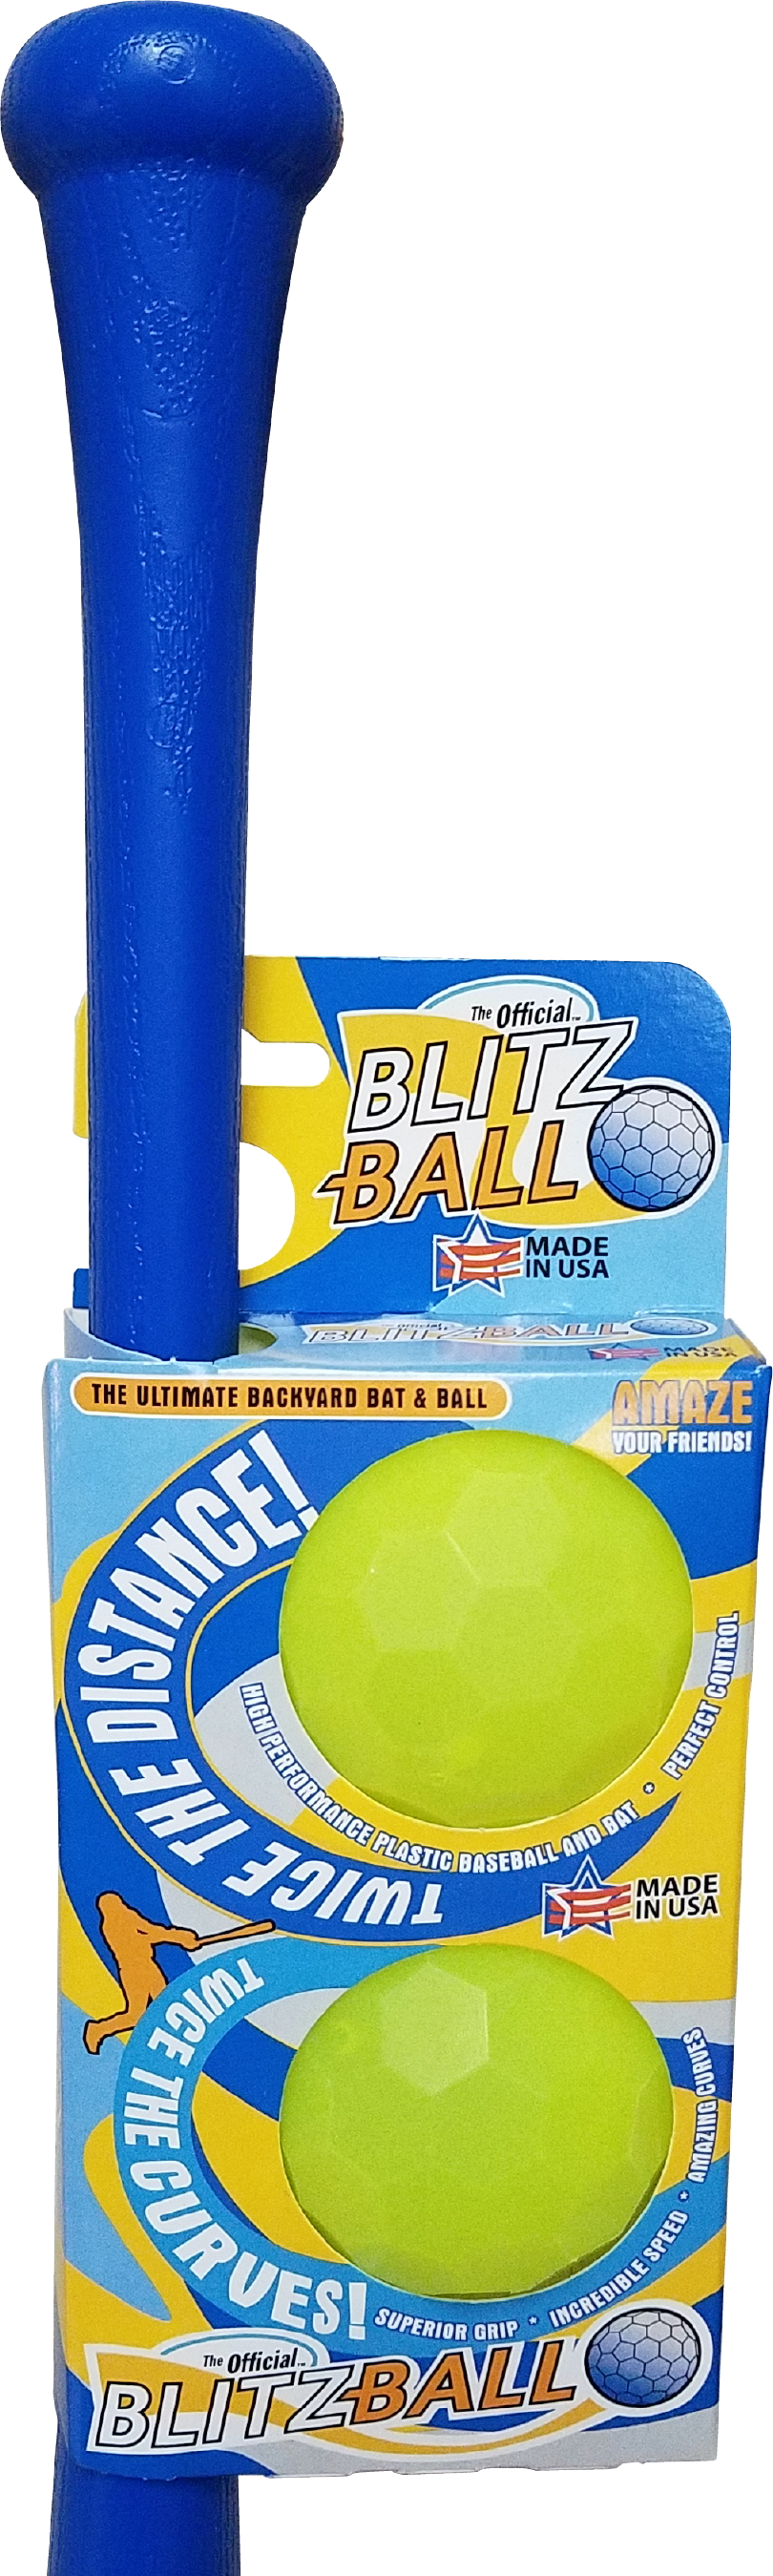 Blitzball 3 Piece 2 Blitz Balls and Bat for sale online 